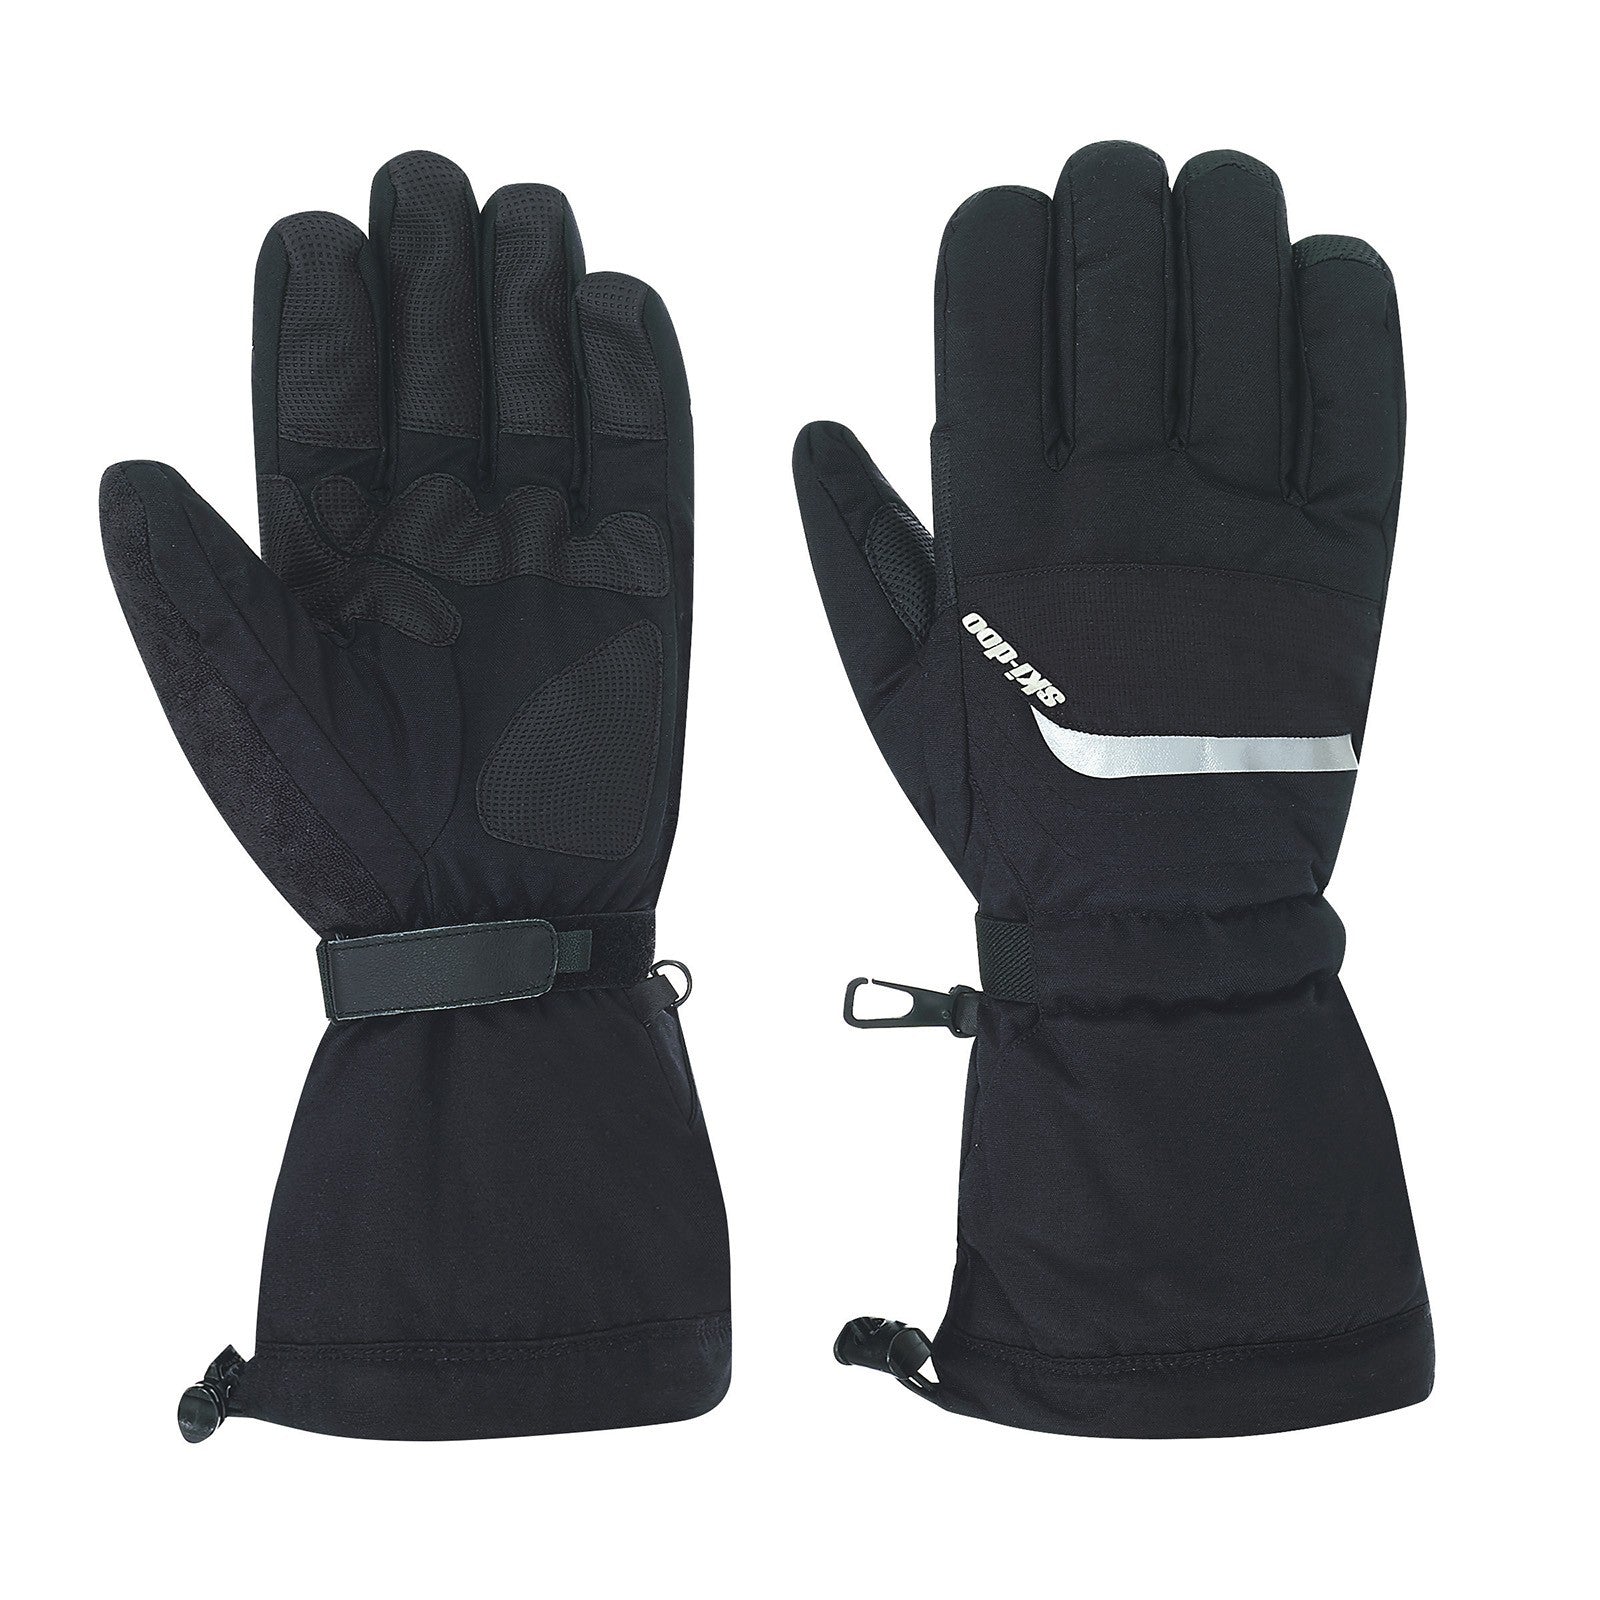 Ski-Doo Holeshot Gloves